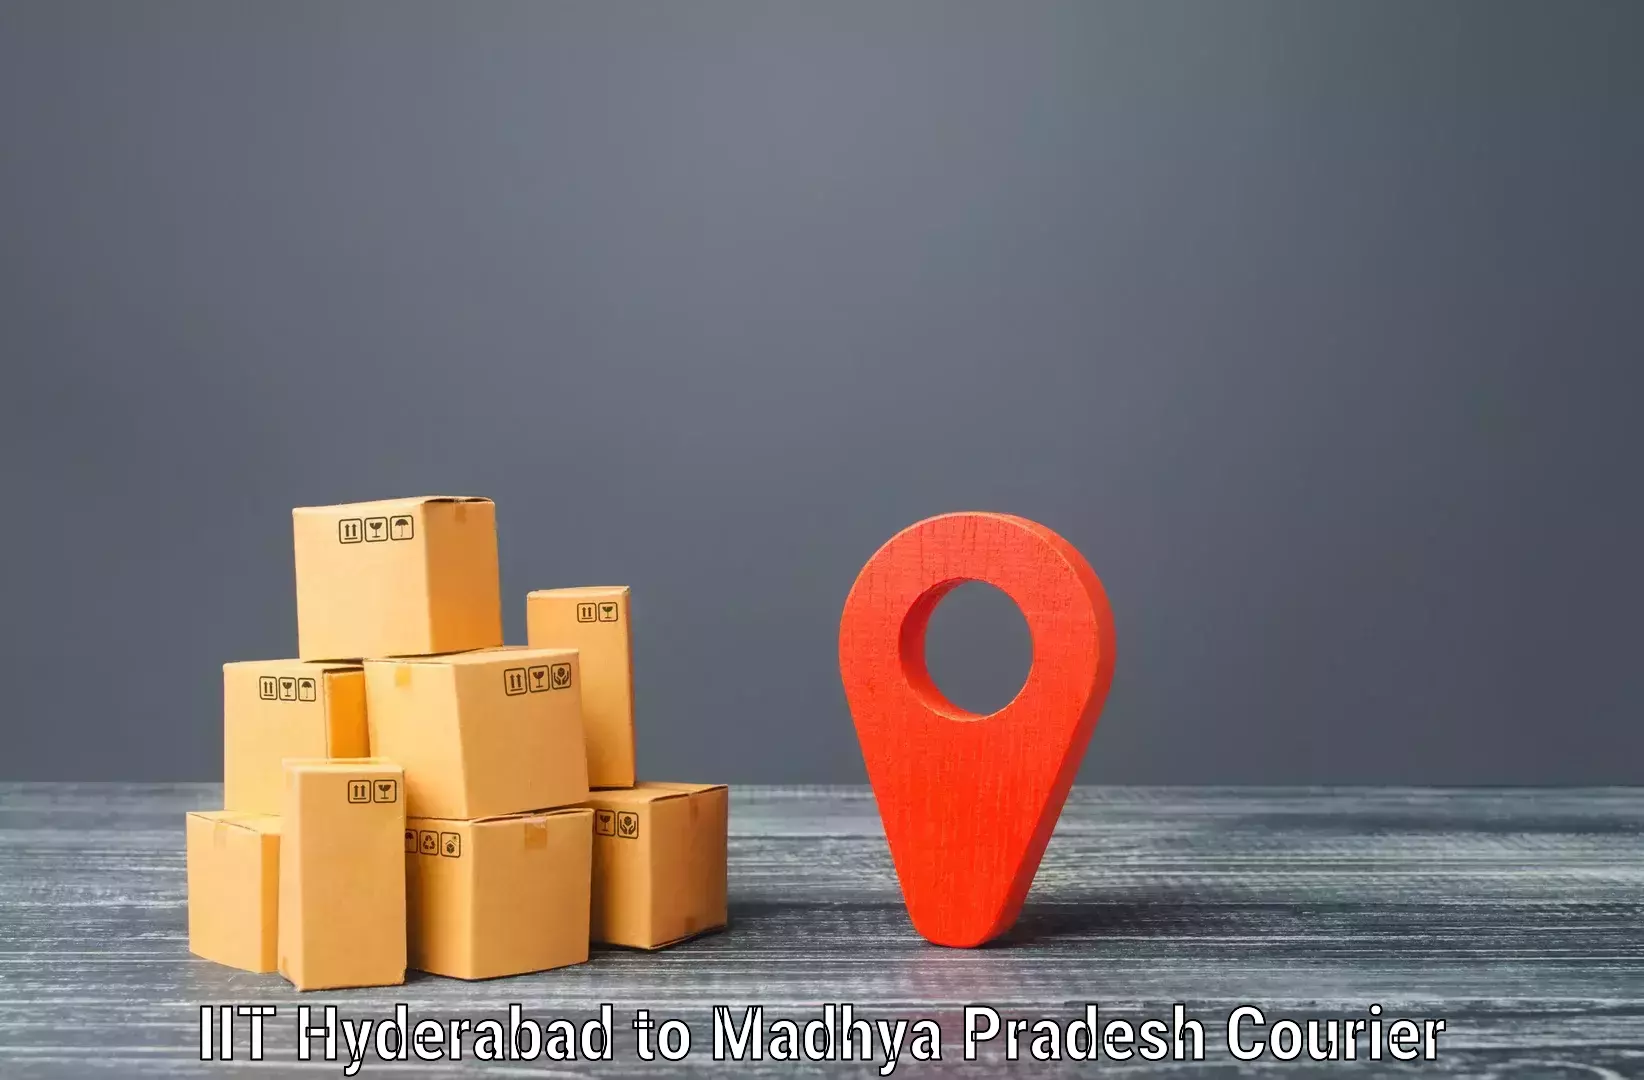 Courier service comparison IIT Hyderabad to Maheshwar